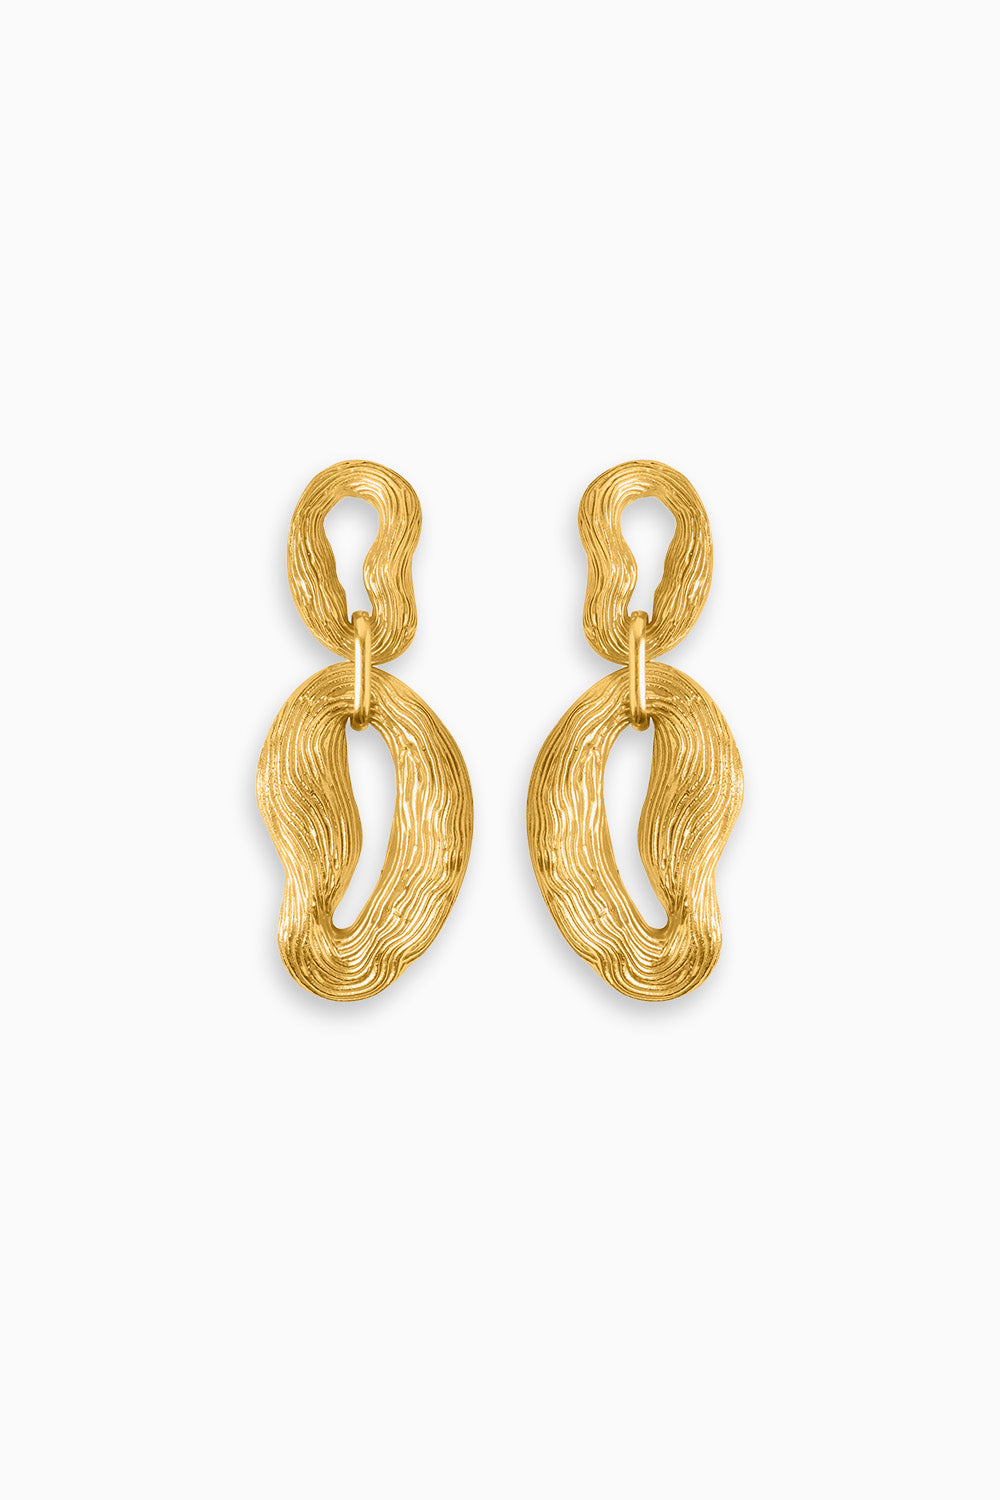 Knotty Pine Earrings - Gold Tone